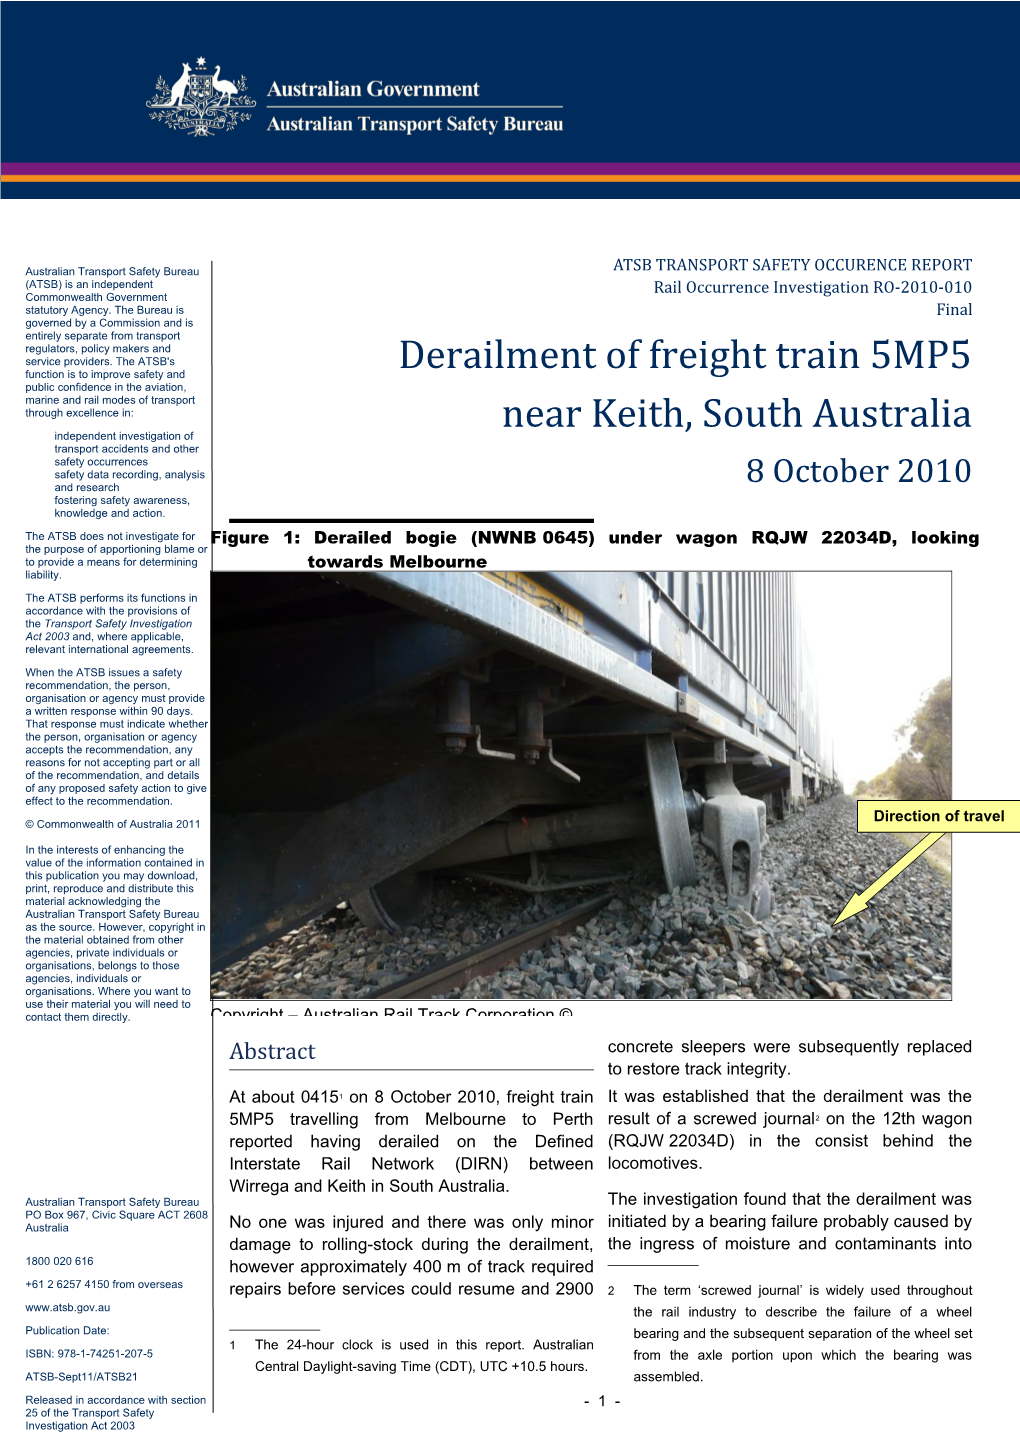 Derailment of Freight Train 5MP5 Near Keith, South Australia 8 October 2010